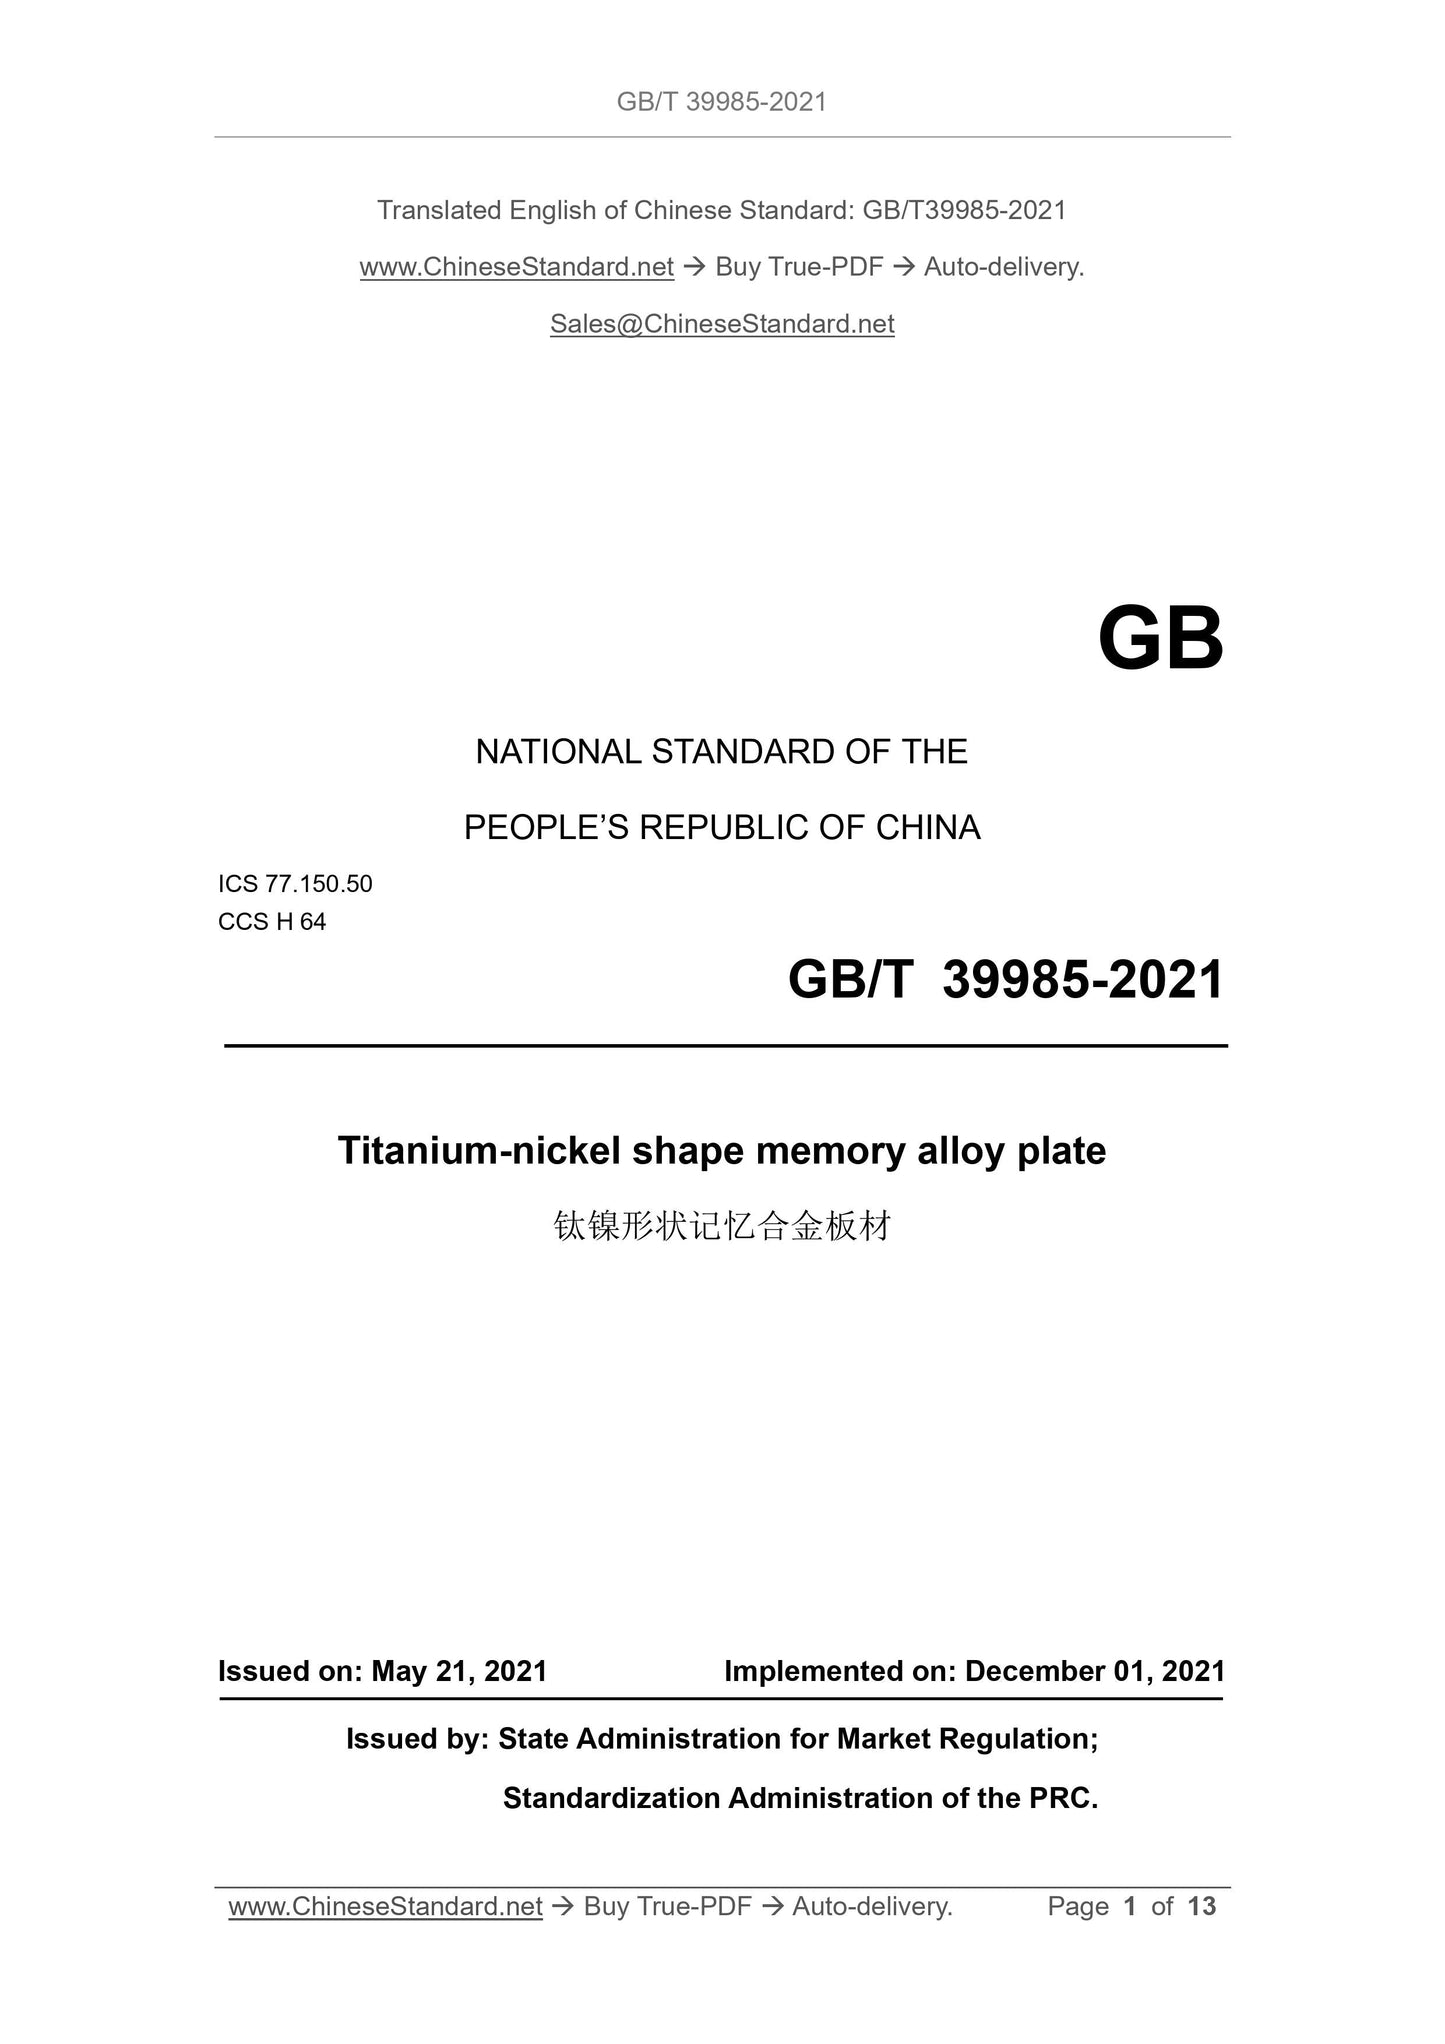 GBT39985-2021 Page 1